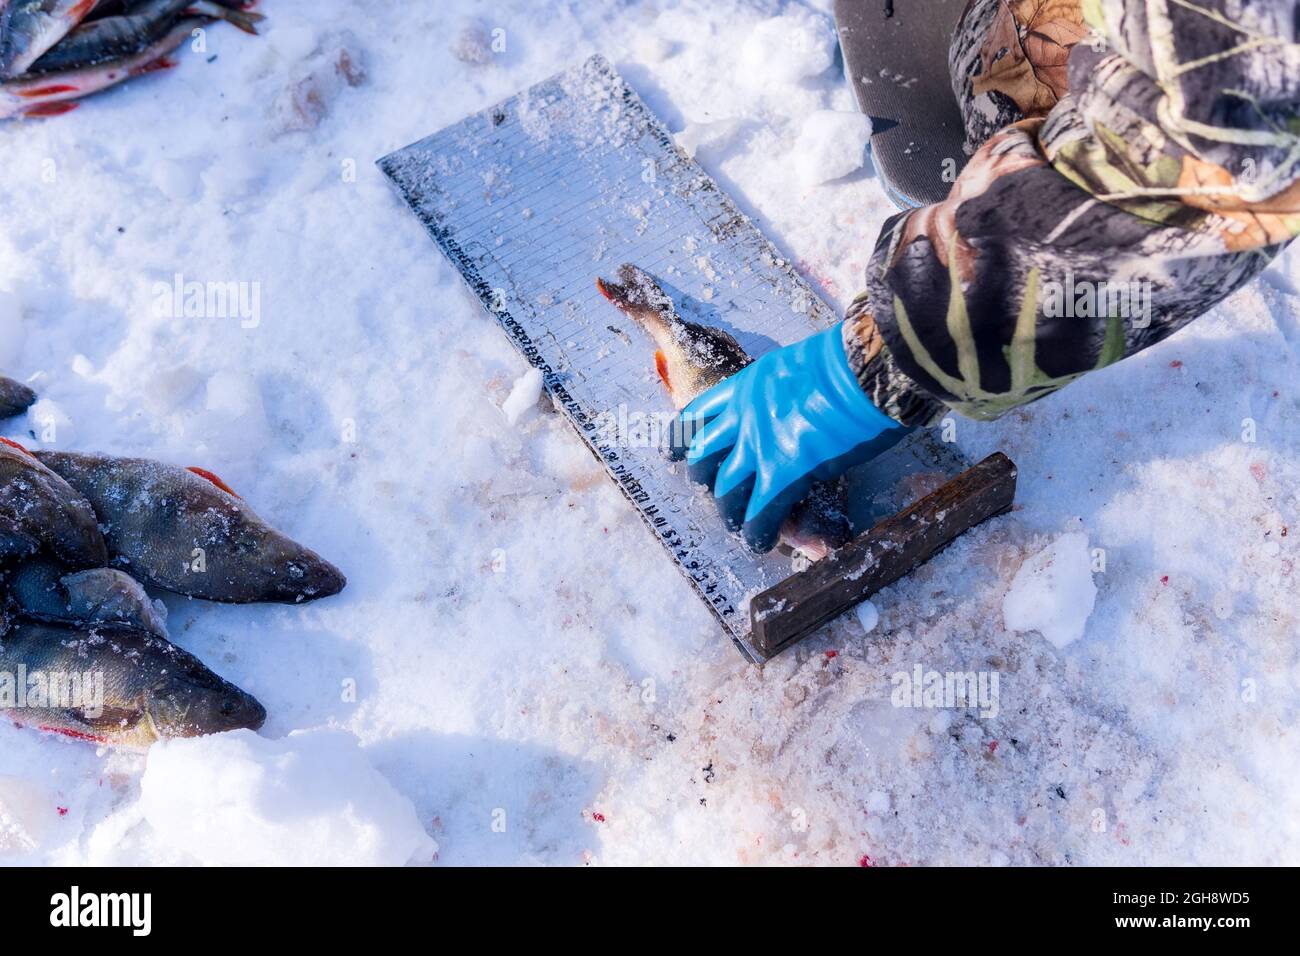 scientists measure perch fish in winter scientific activity. selective focus Stock Photo